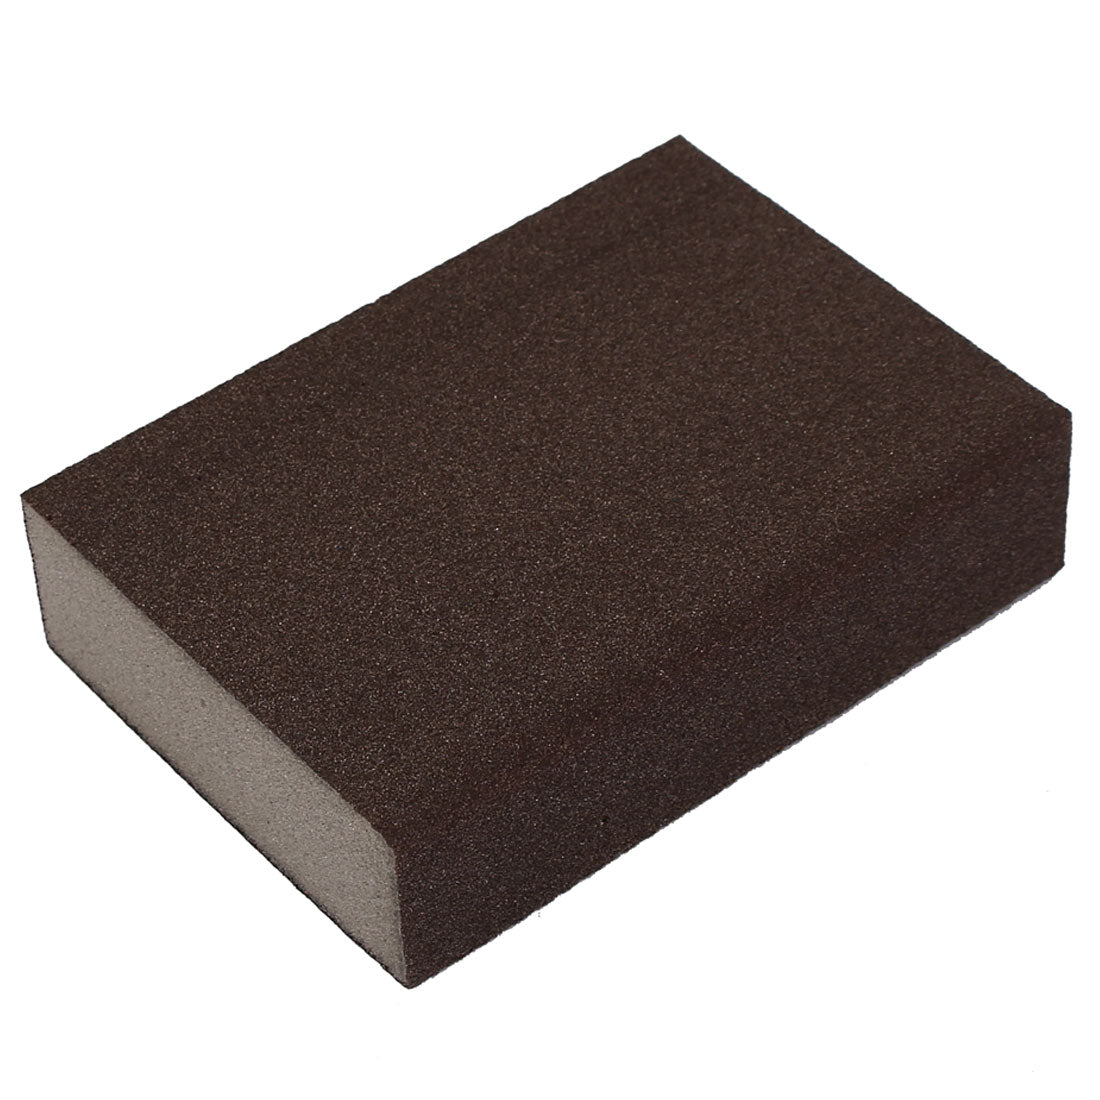 uxcell Uxcell 100mm x 70mm x 25mm 80 Grit Sponges Polishing Pad Sanding Block